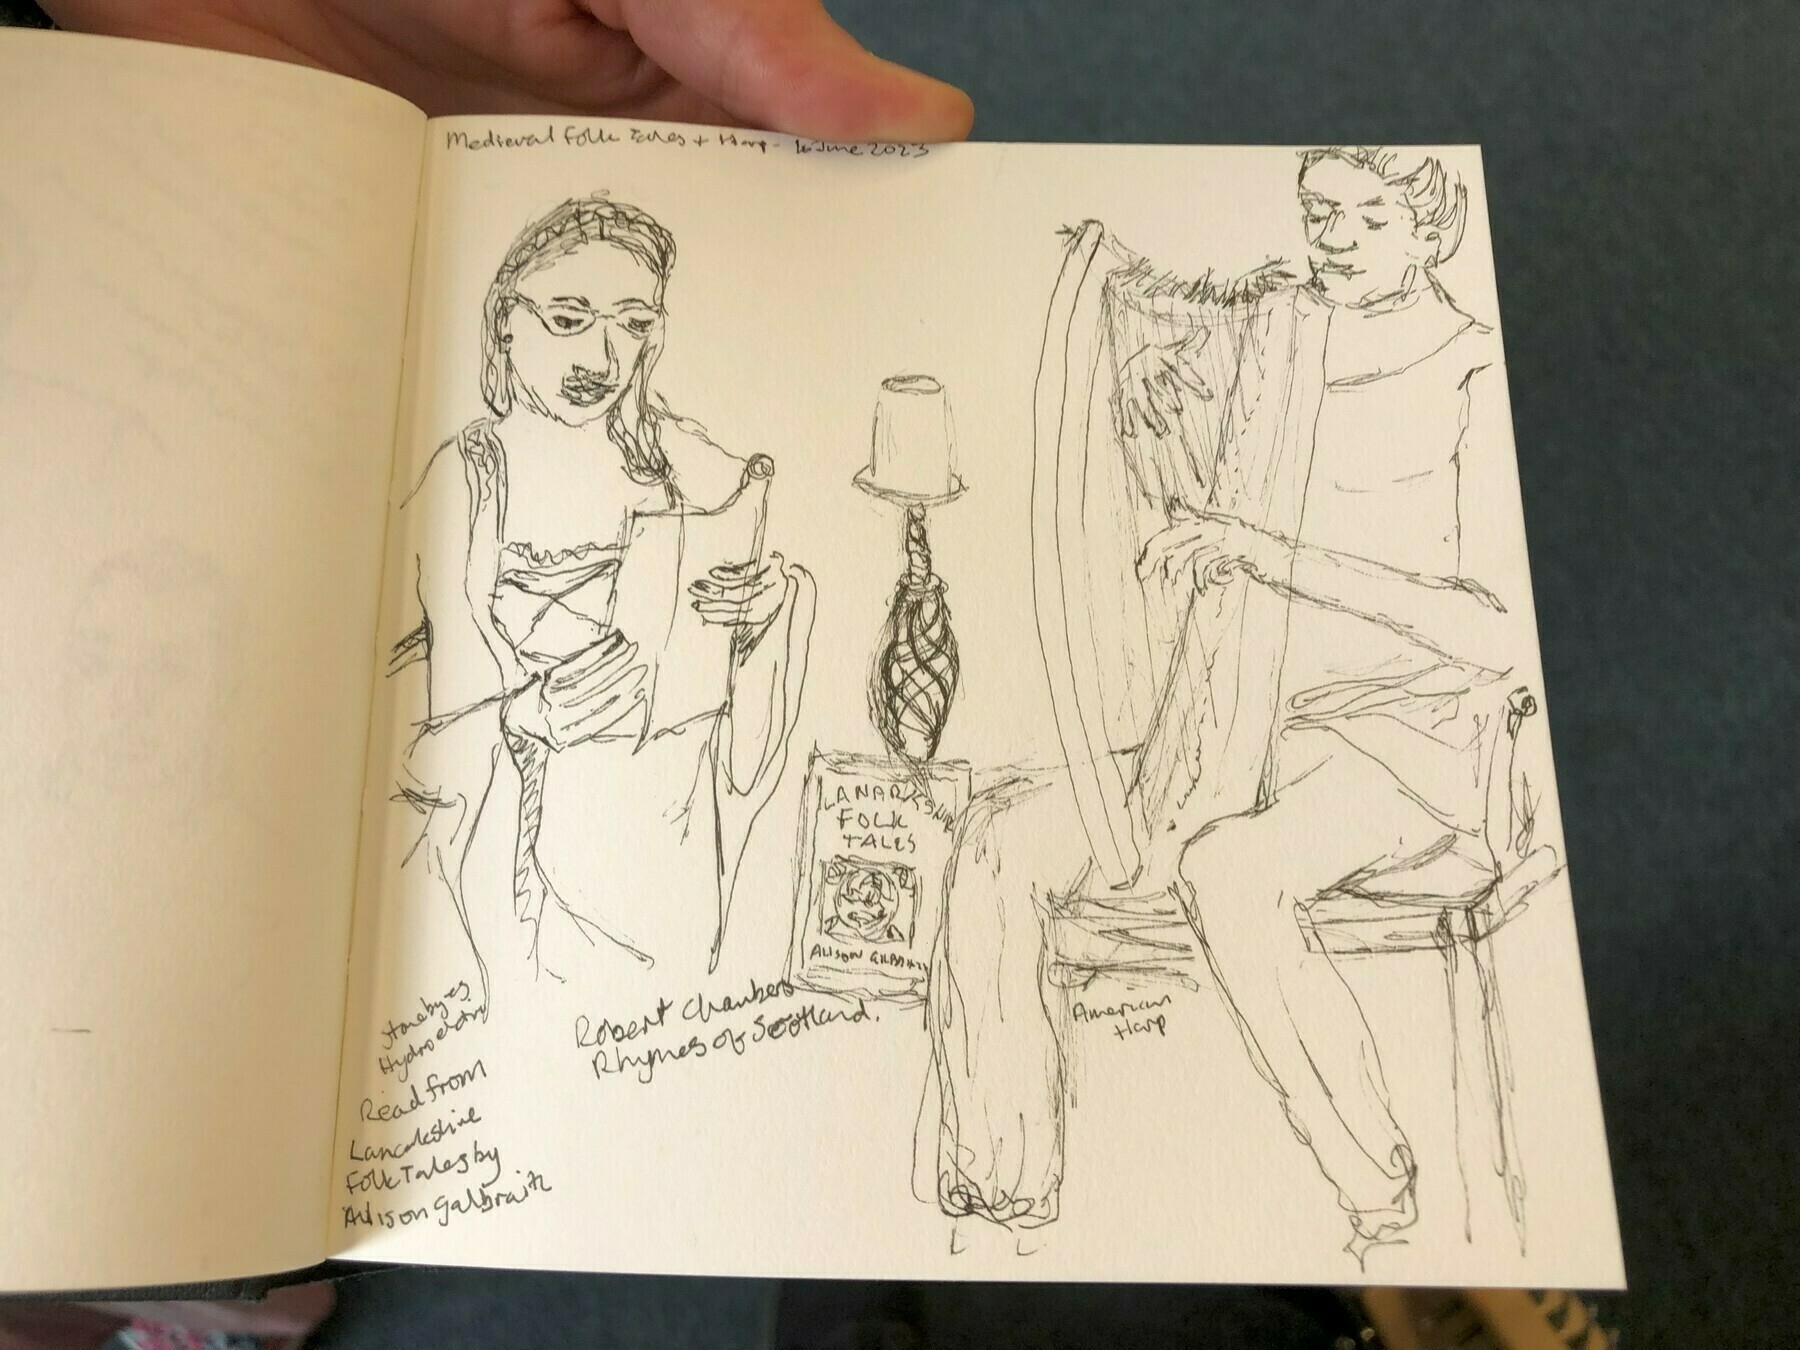 Artist's impression of a harpist and a storyteller in a sketchbook